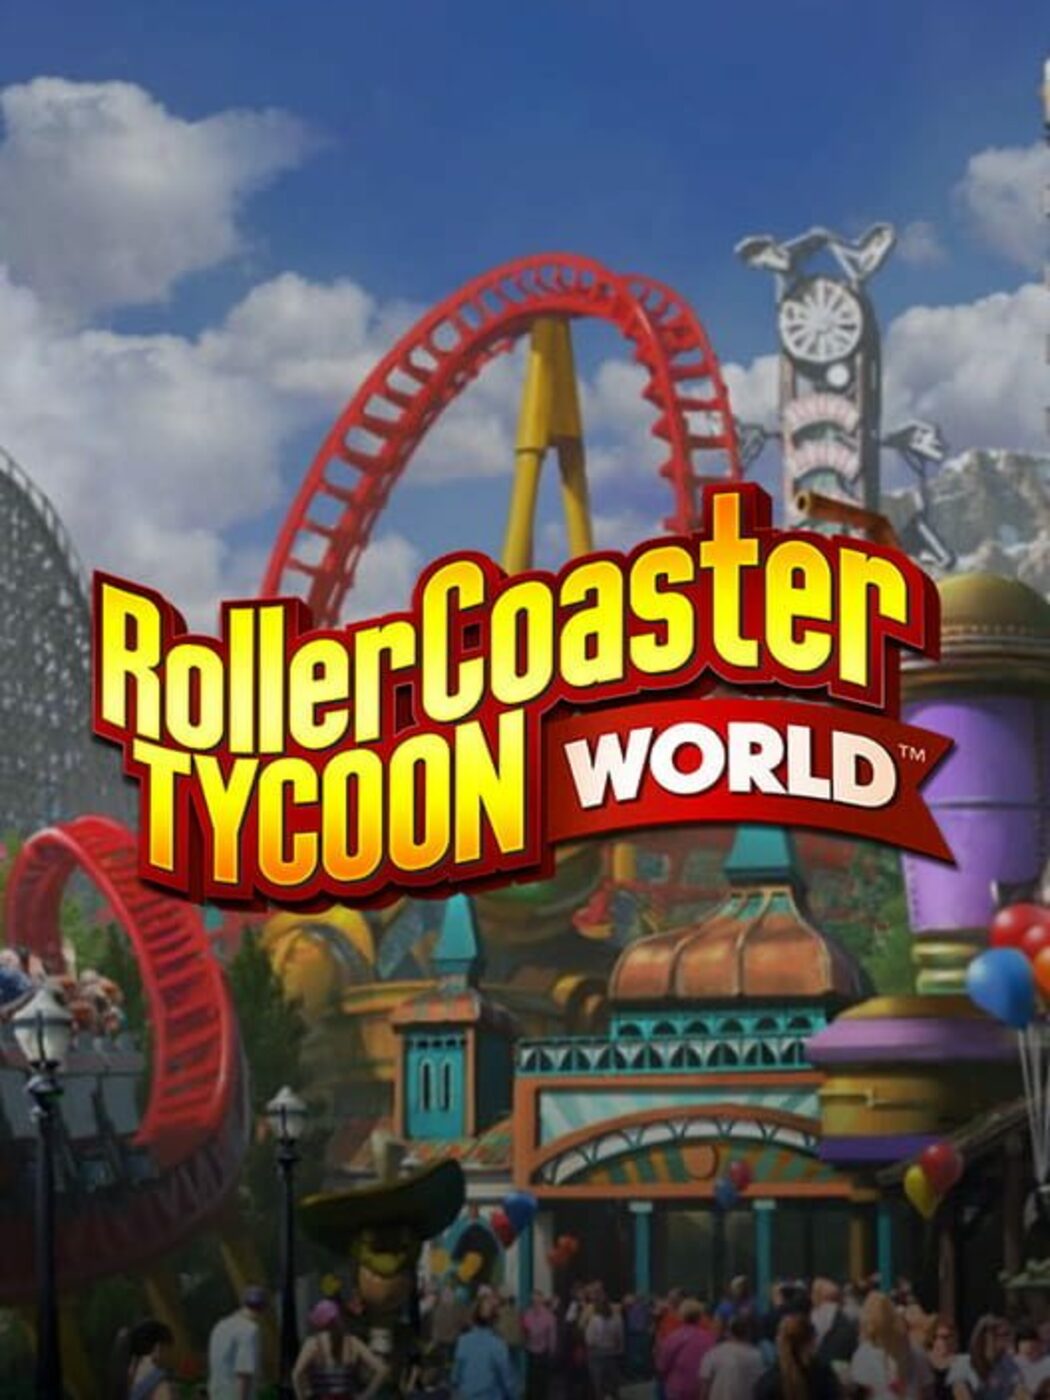 Buy RollerCoaster Tycoon Classic Steam Key